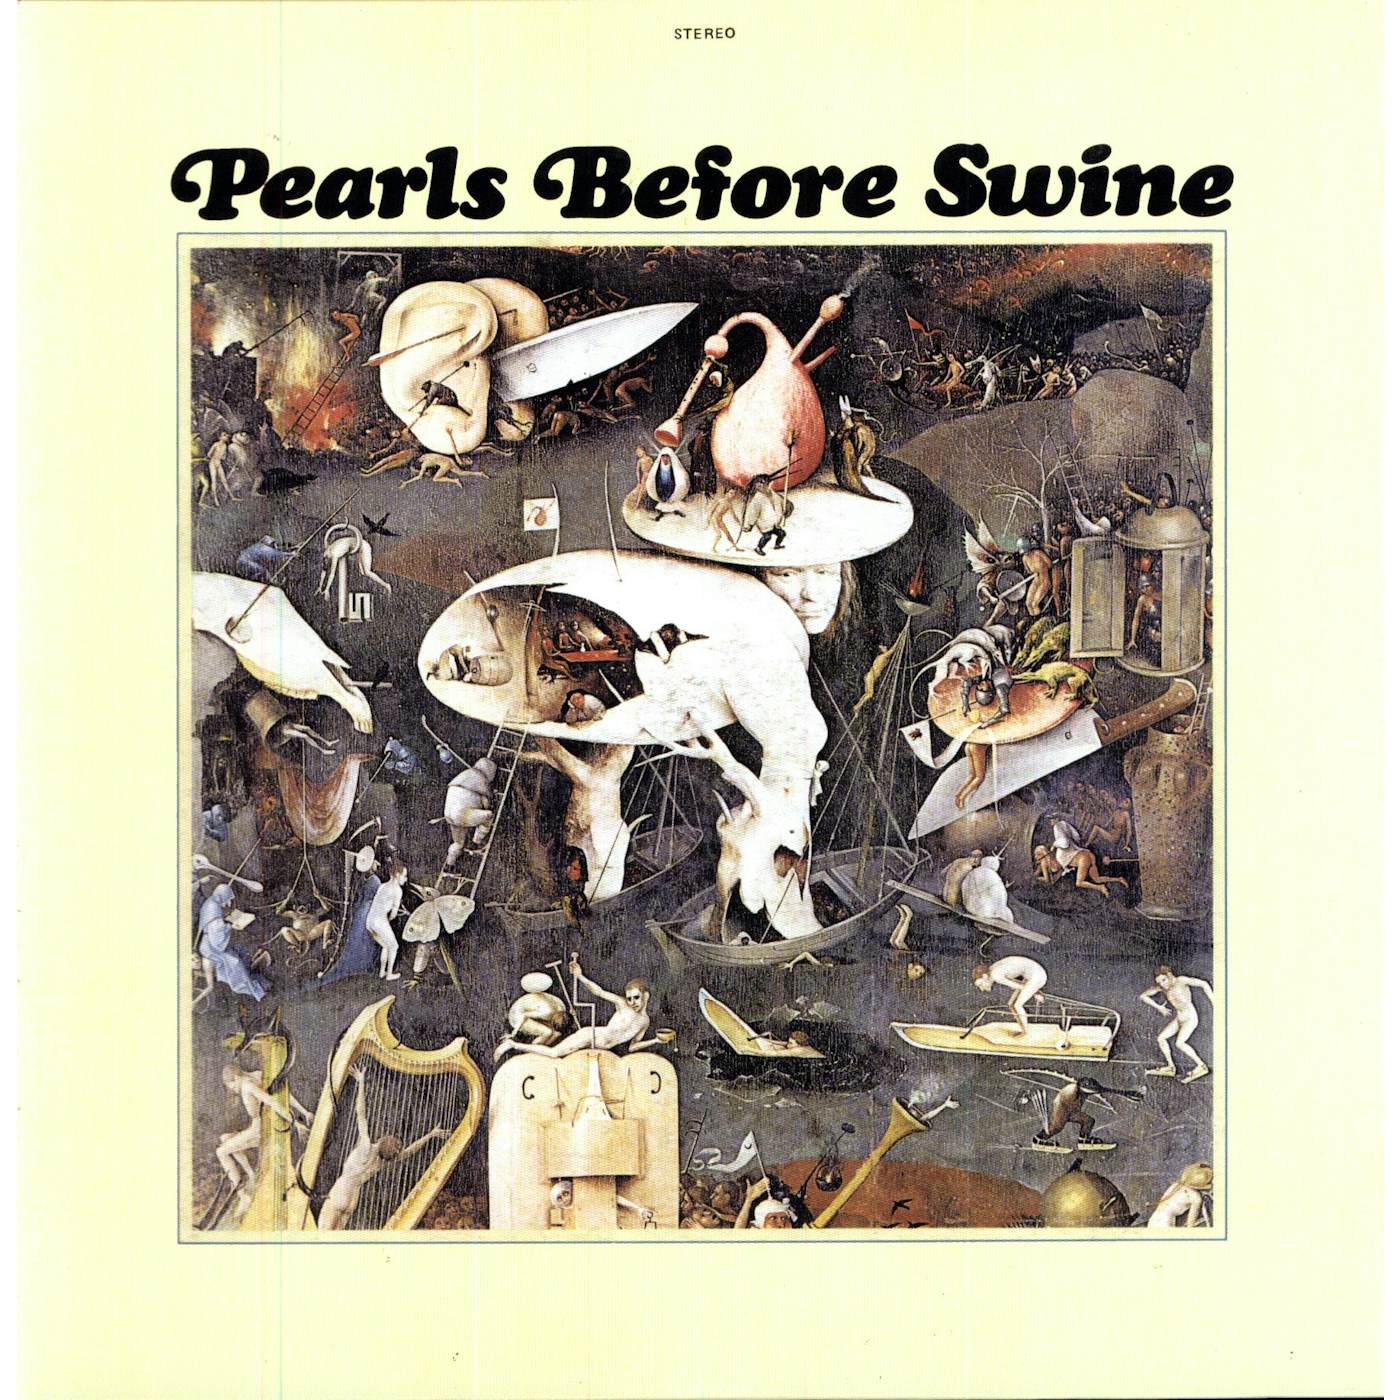 Pearls Before Swine ONE NATION UNDERGROUND Vinyl Record